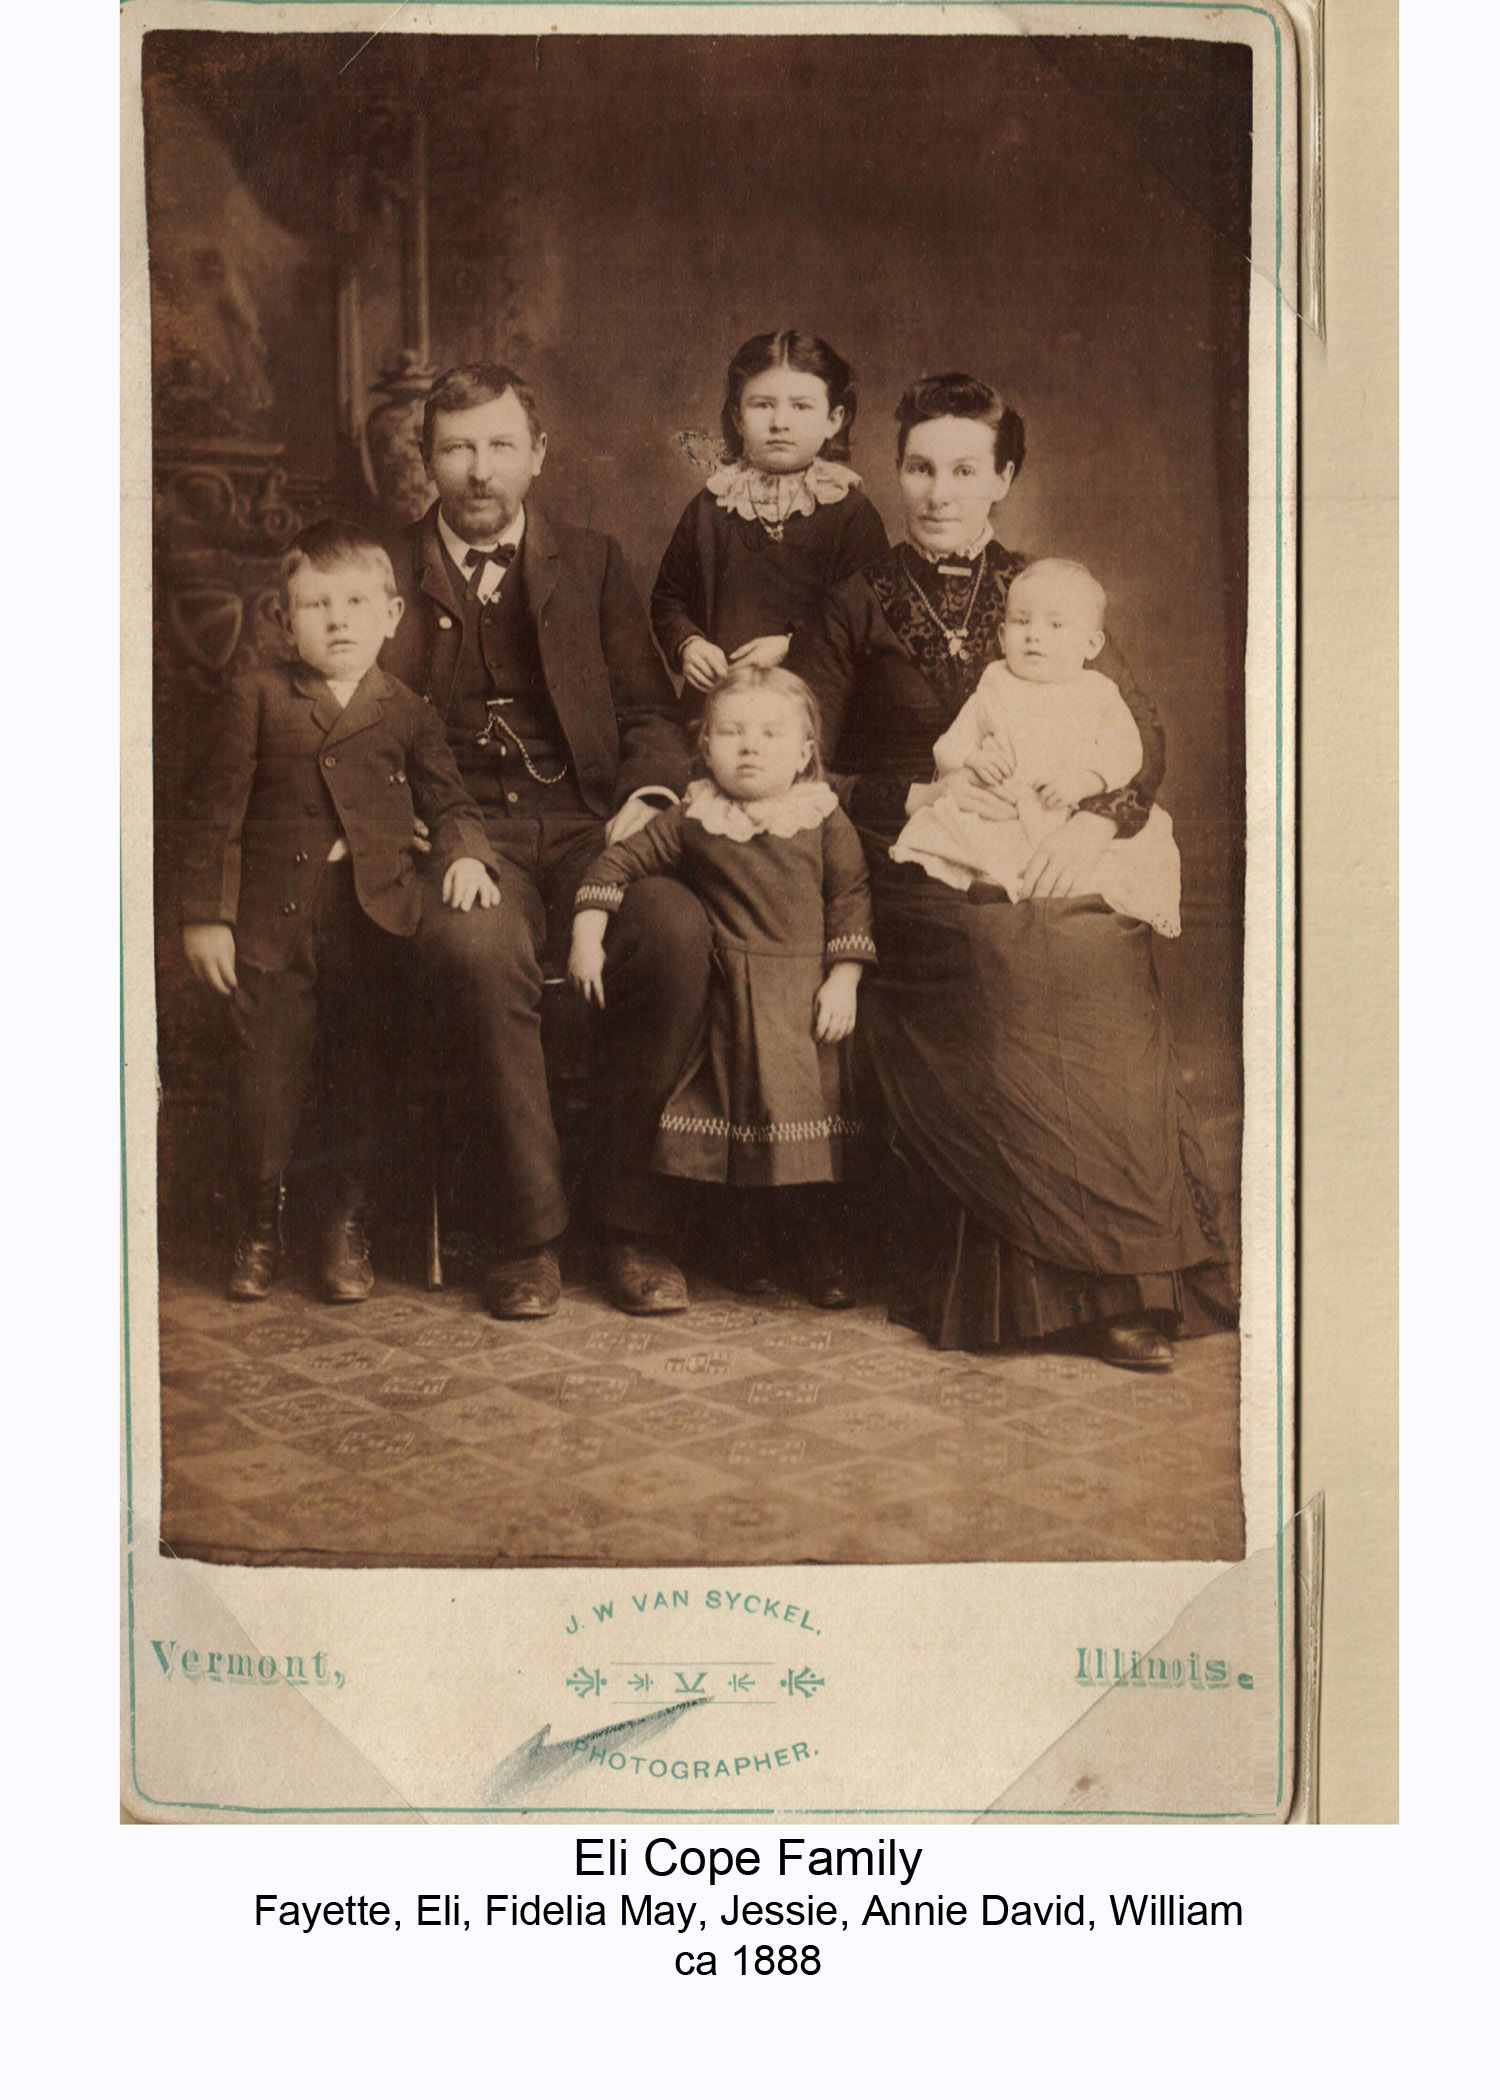 Craft, Eli Cope and Family photo - ca 1888